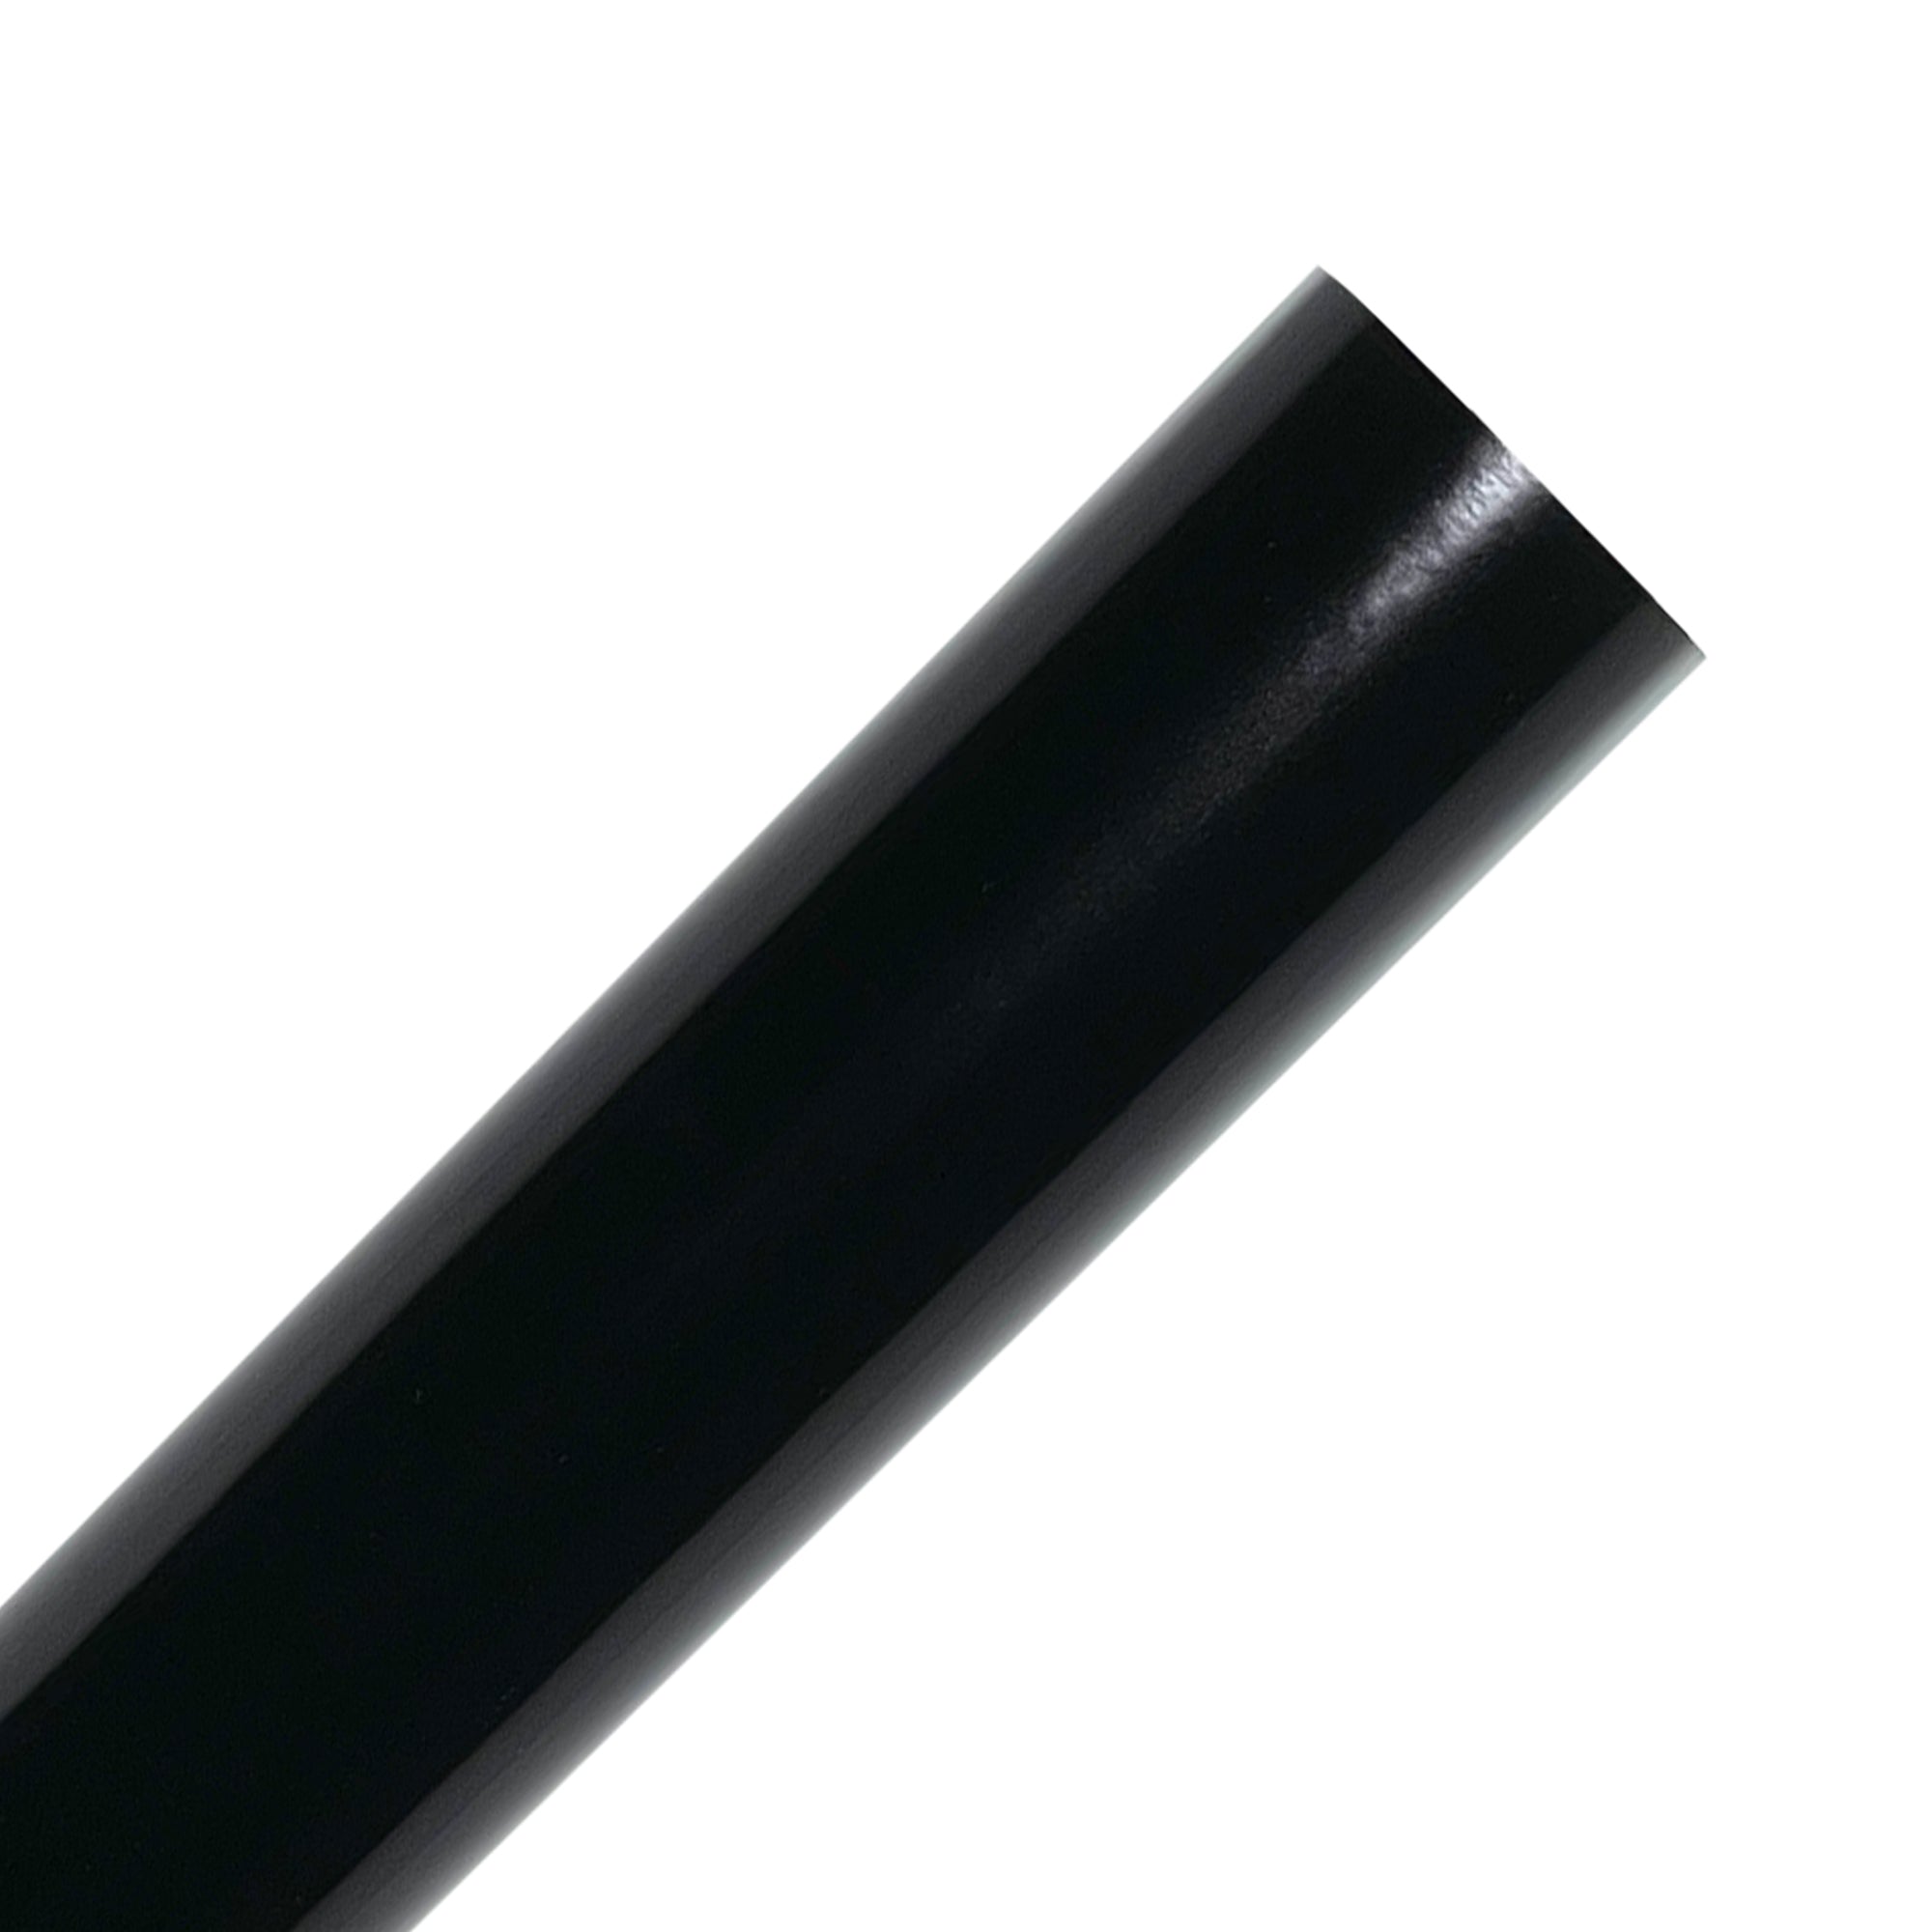 Matte Black Adhesive Vinyl Rolls By Craftables